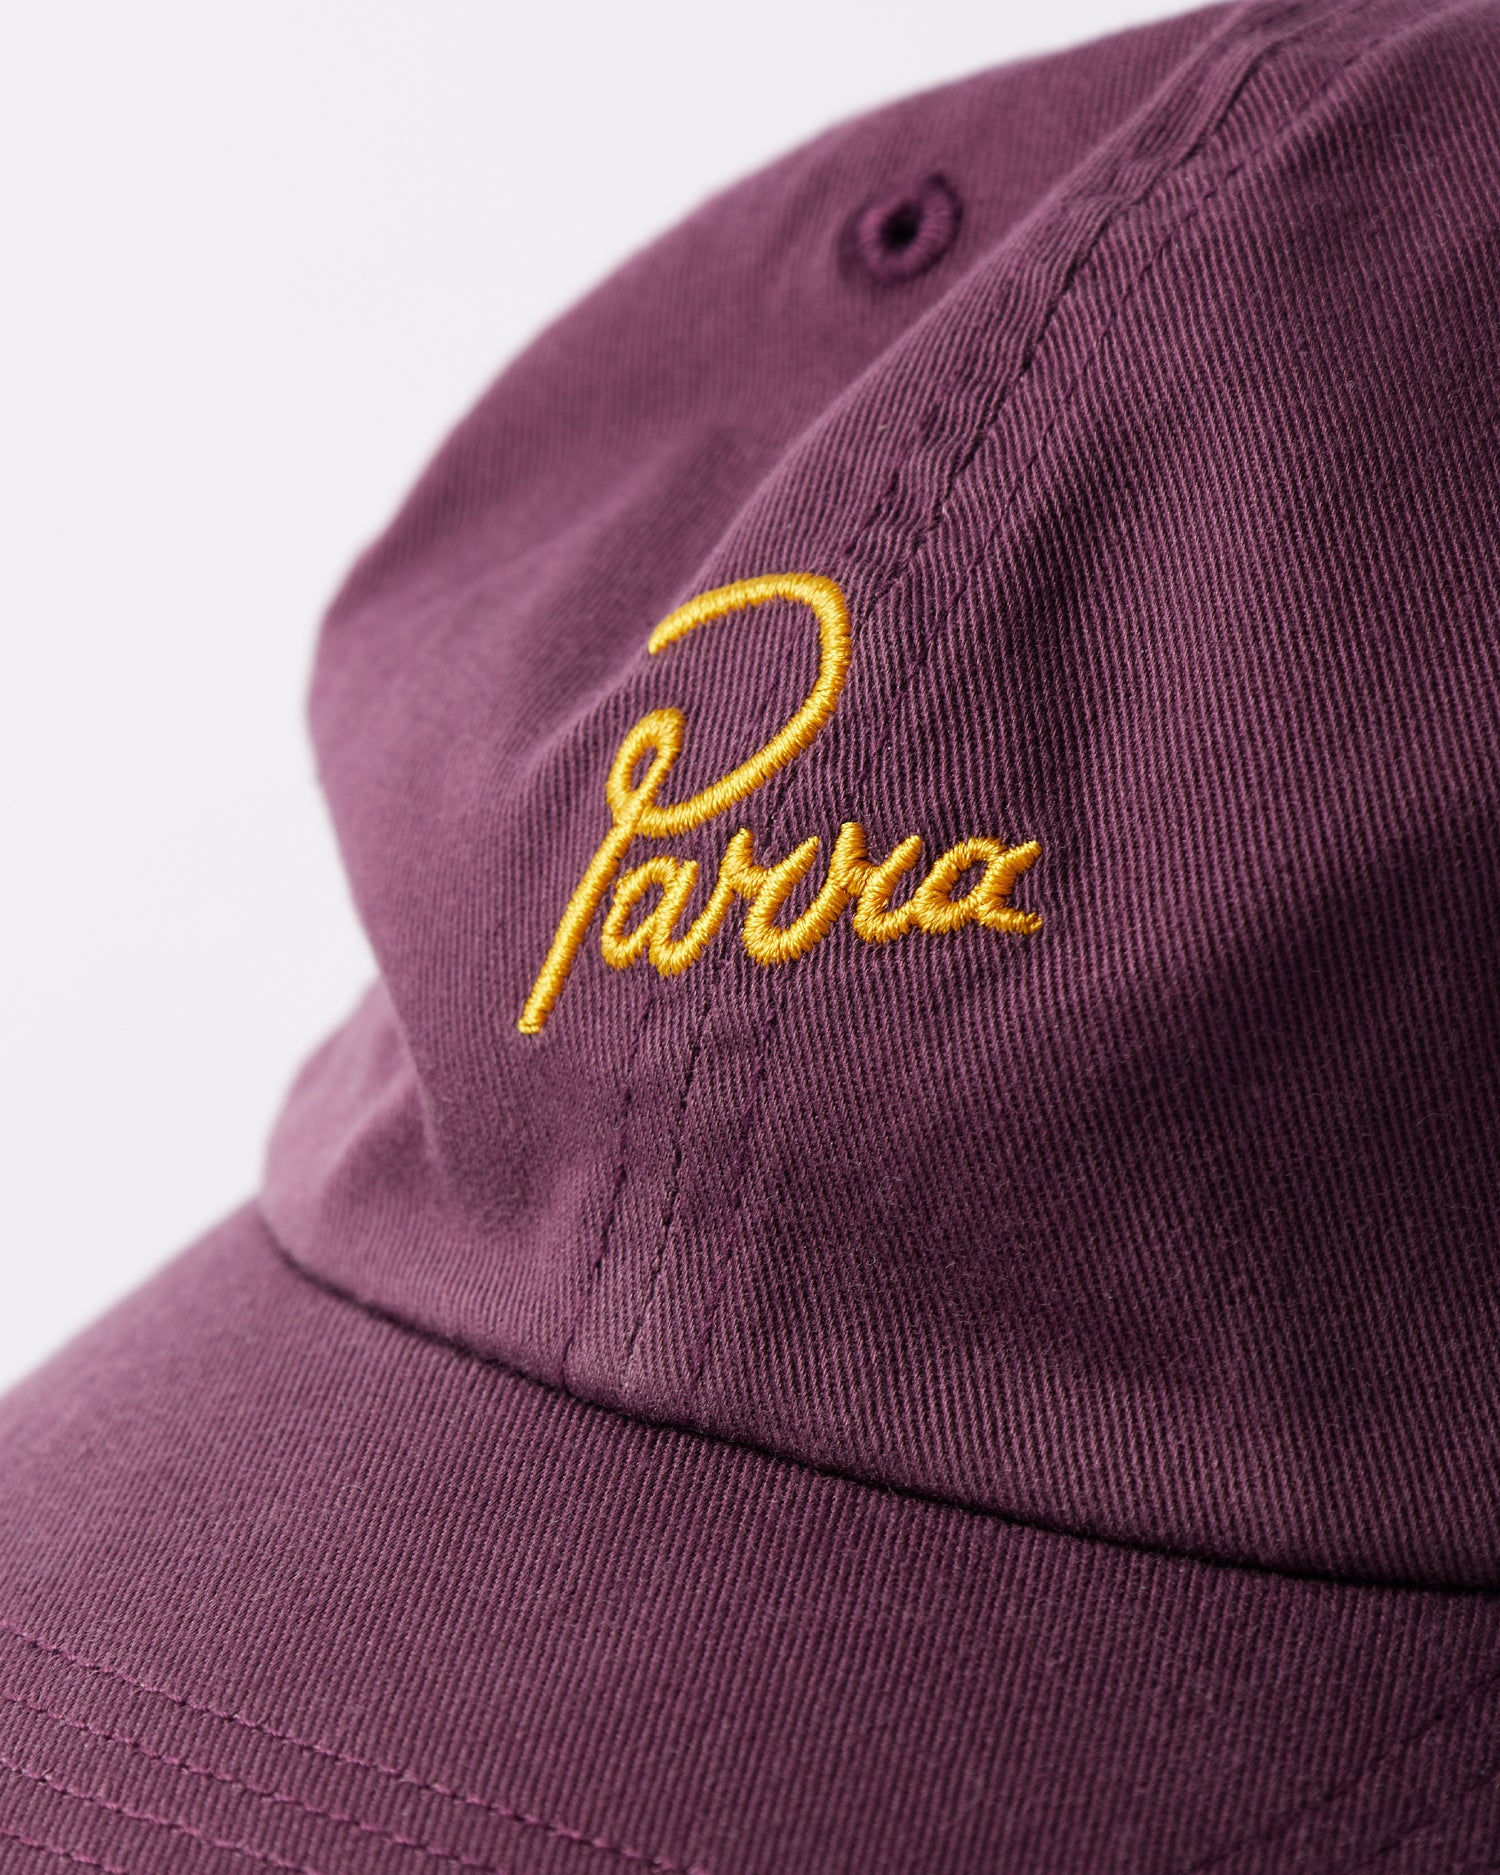 ByParra Script Logo 6 Panel Hat (Dark Violet)